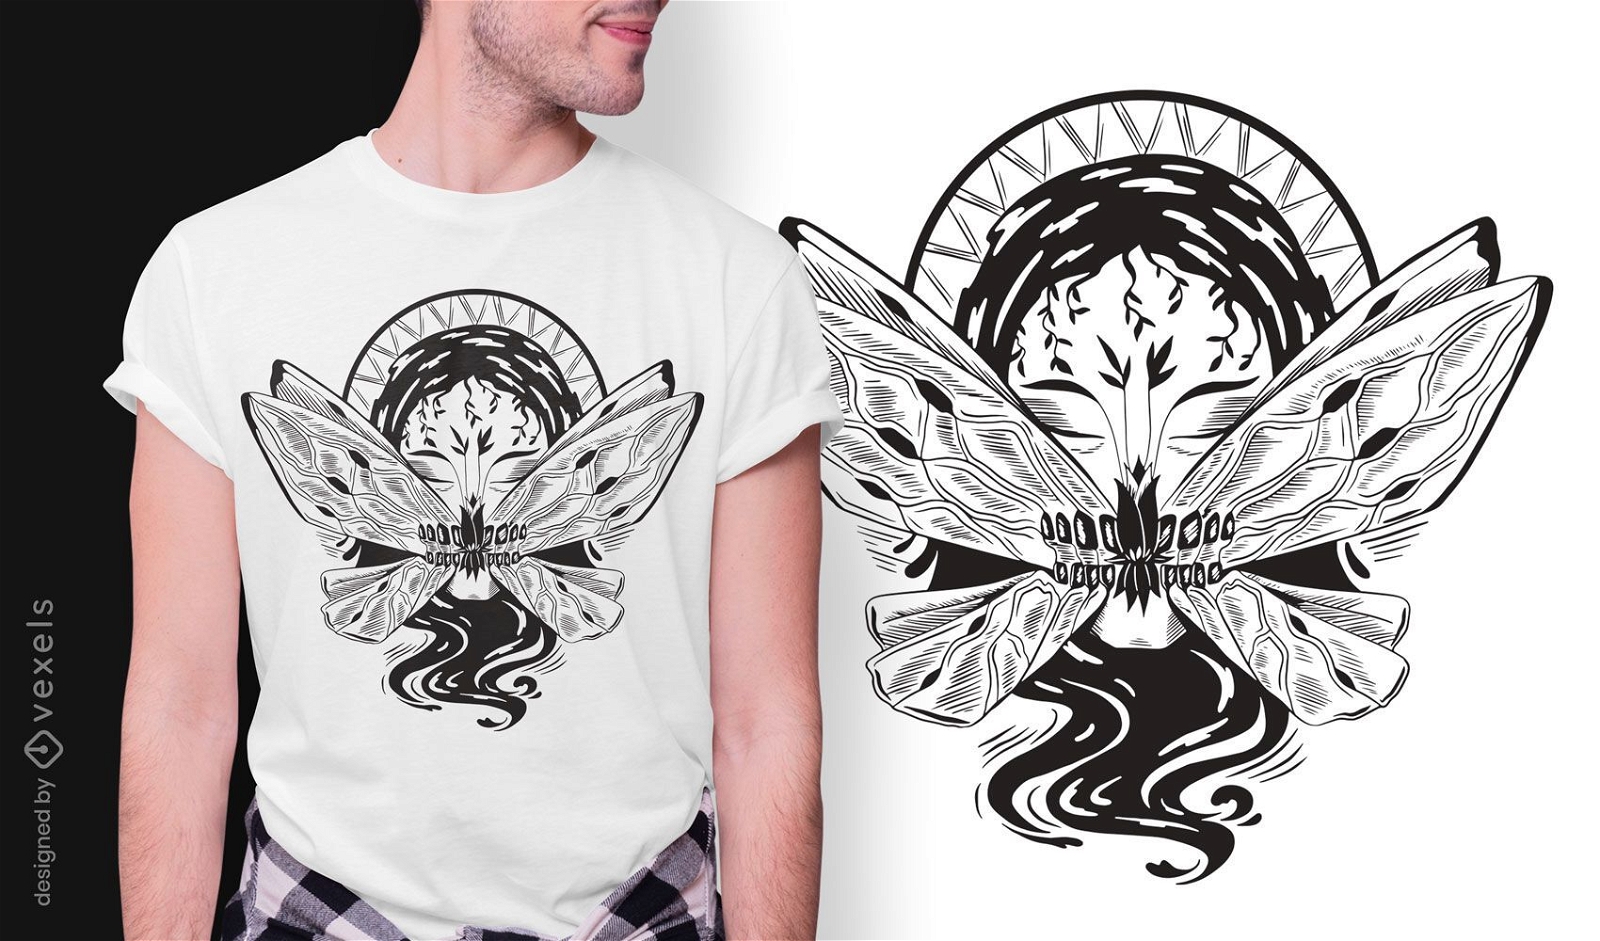 Boca de borboleta escura design de t-shirt art nouveau